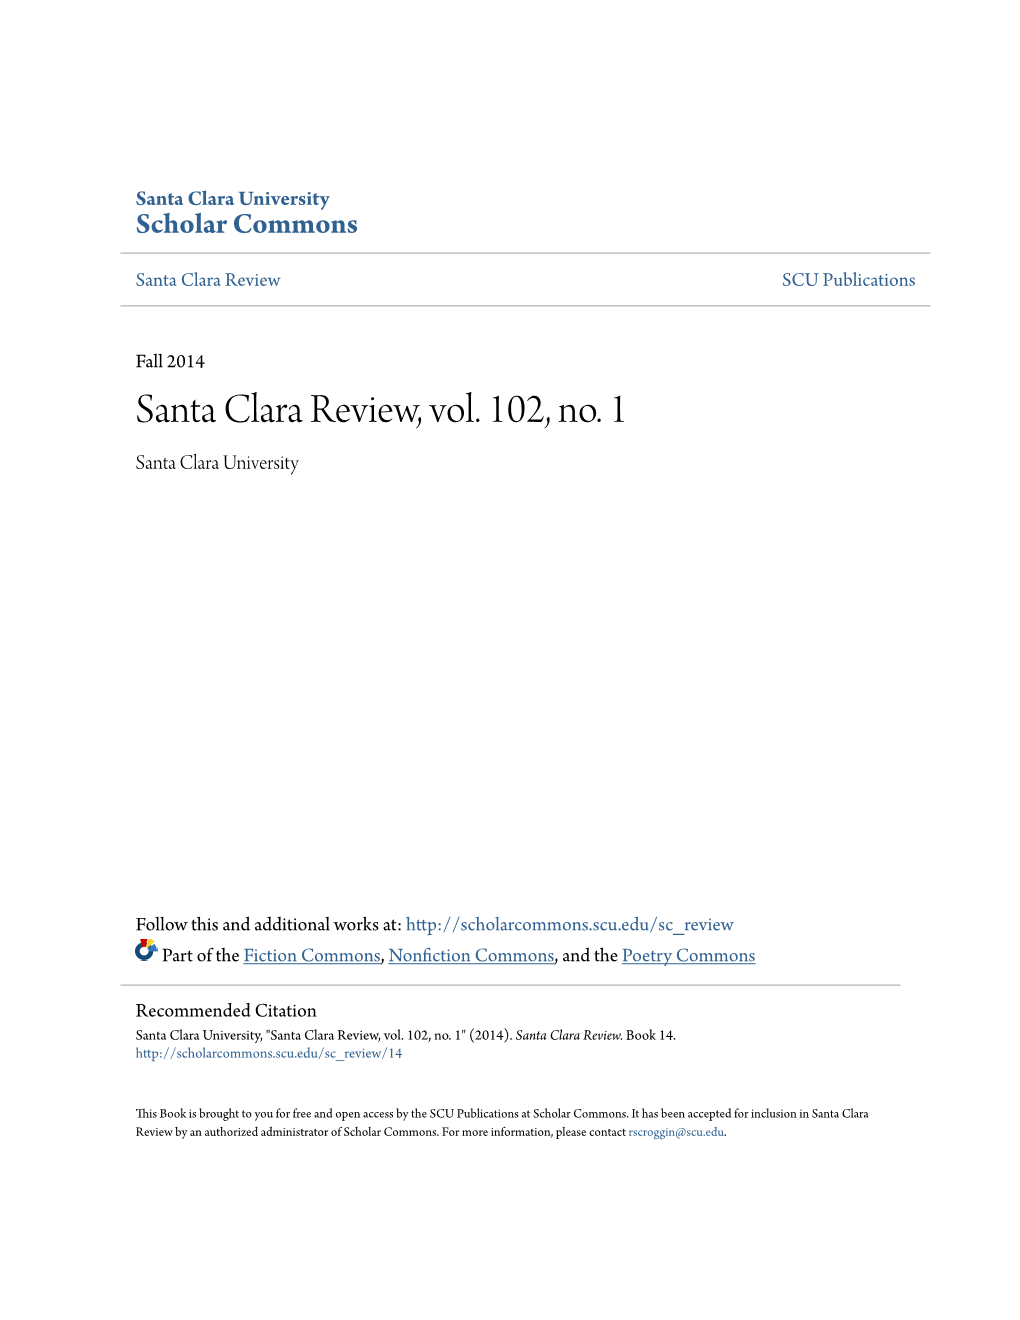 Santa Clara Review, Vol. 102, No. 1 Santa Clara University